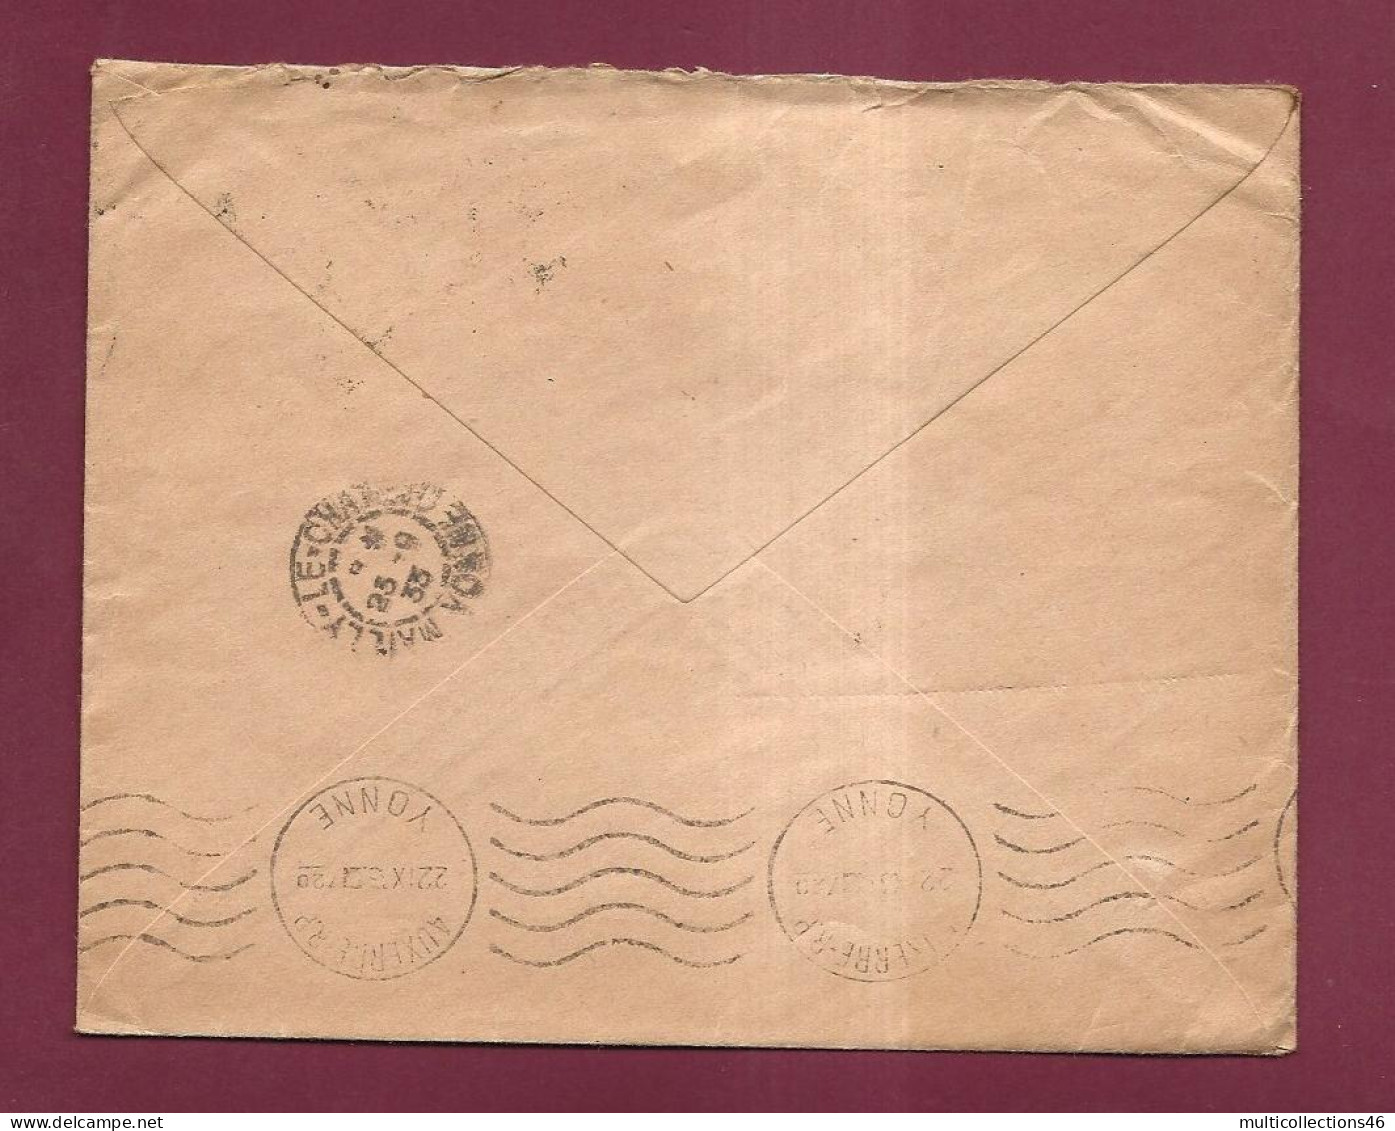 170723A - LETTRE ETRANGER - PERFORE RL - LEOPOLD REITZER SZEGED HONGRIE - 1933 - Postmark Collection